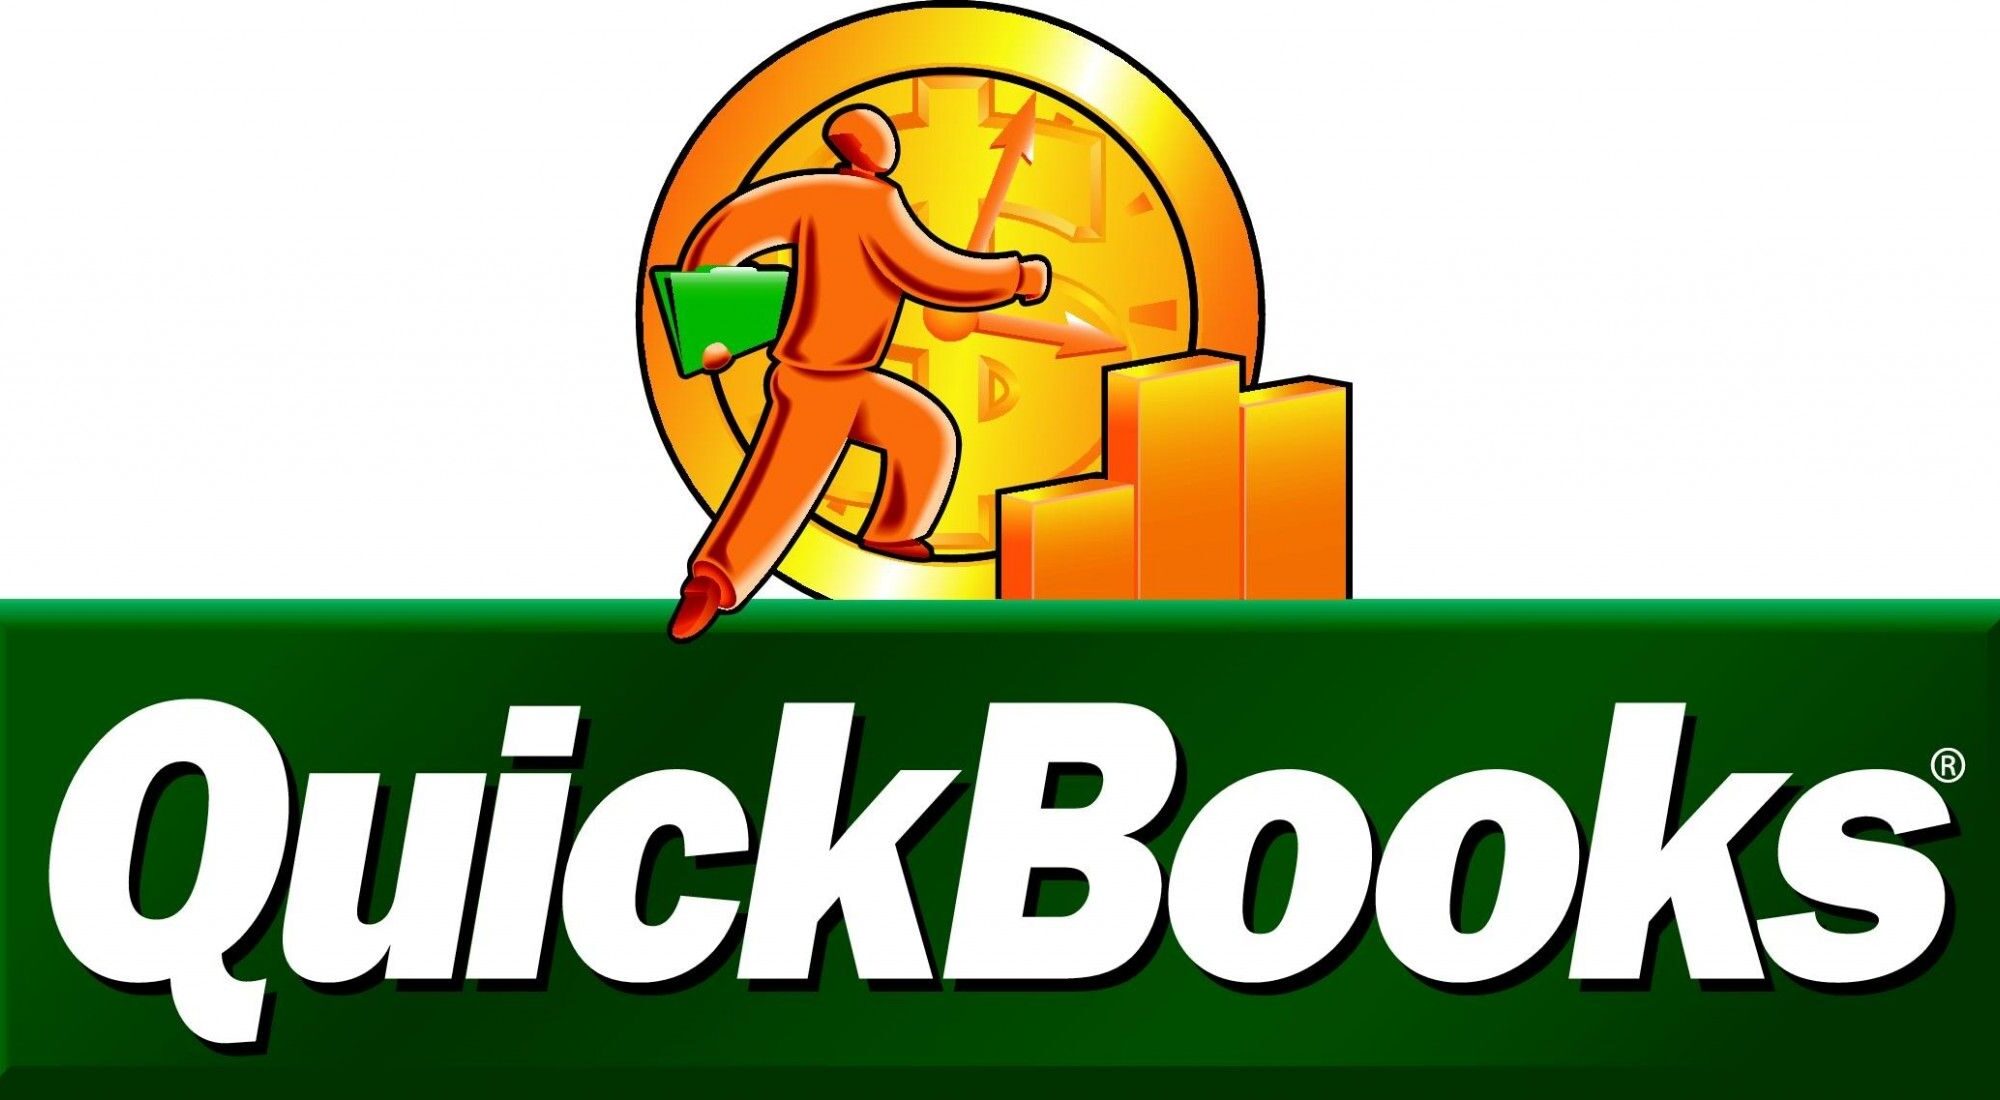 QuickBooks Logo Interface